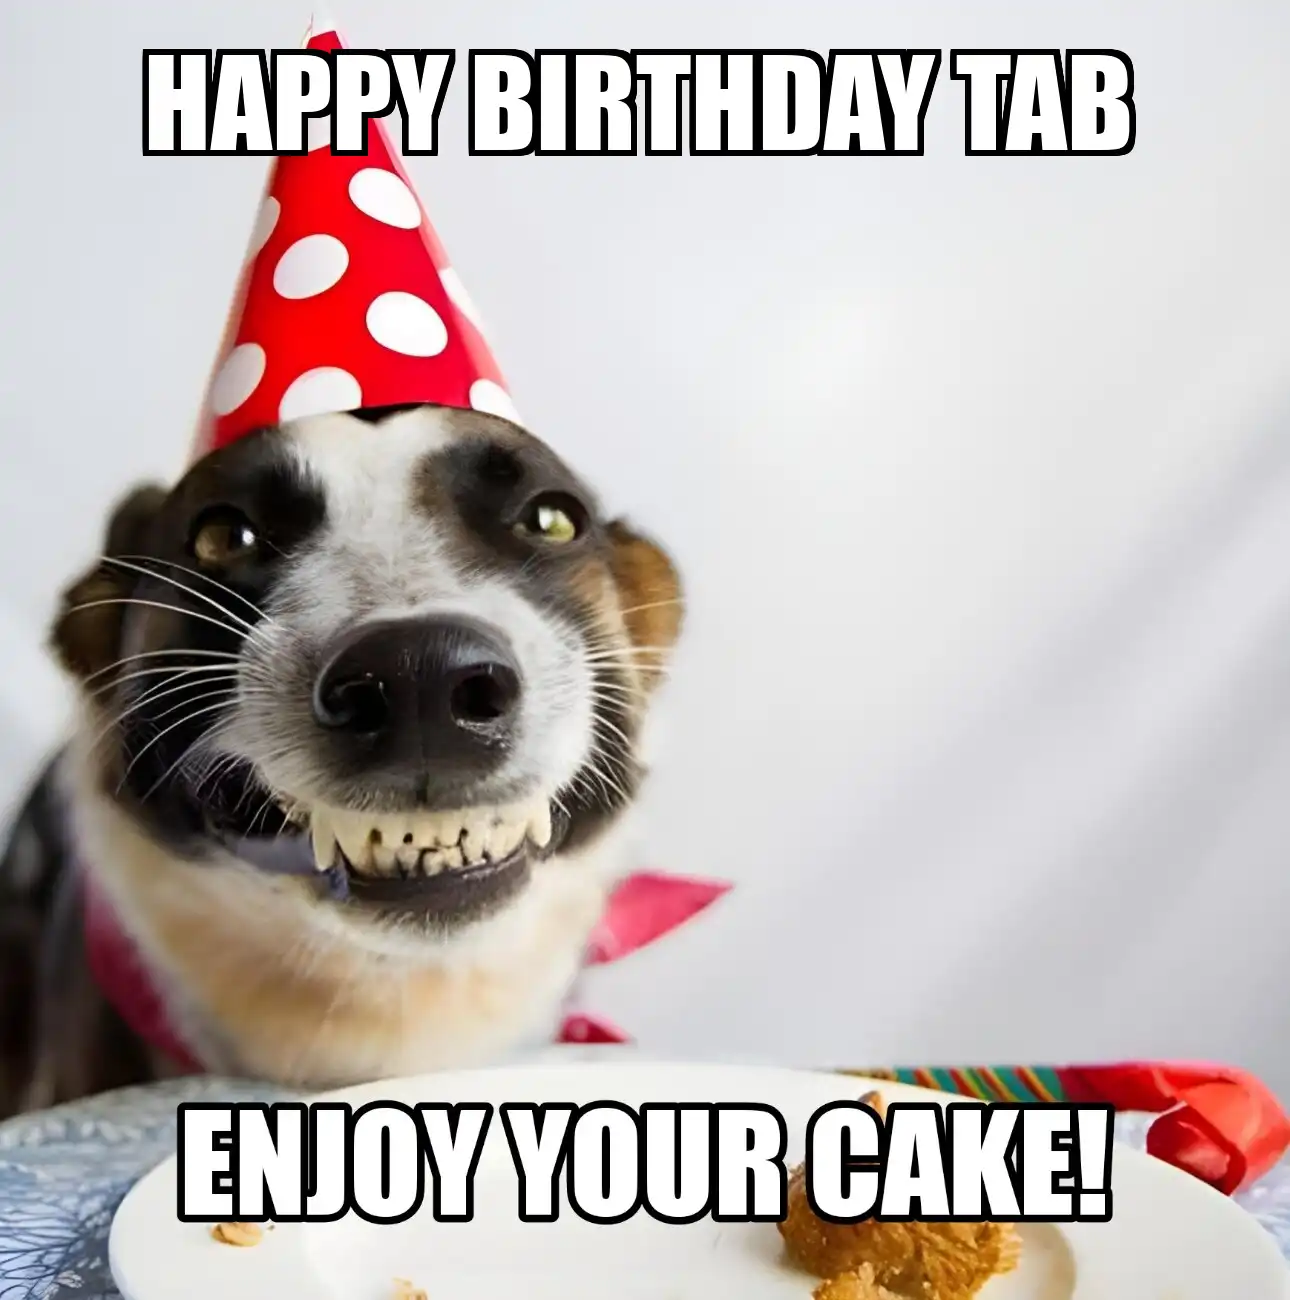 Happy Birthday Tab Enjoy Your Cake Dog Meme